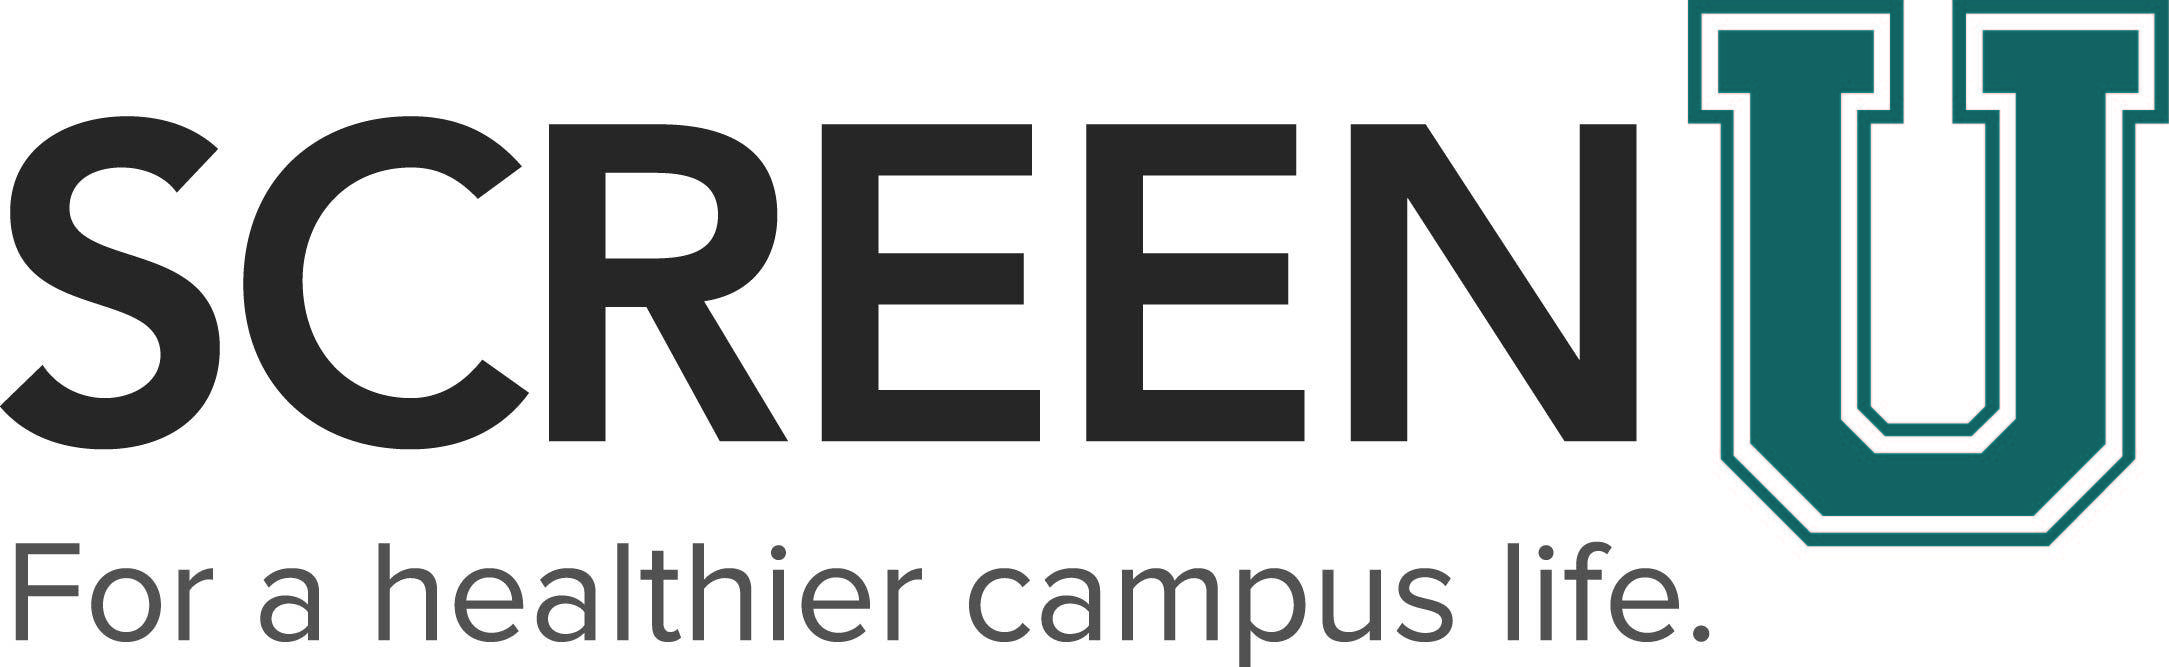 Life U Logo - Self-Assessments | Clemson University Student Affairs